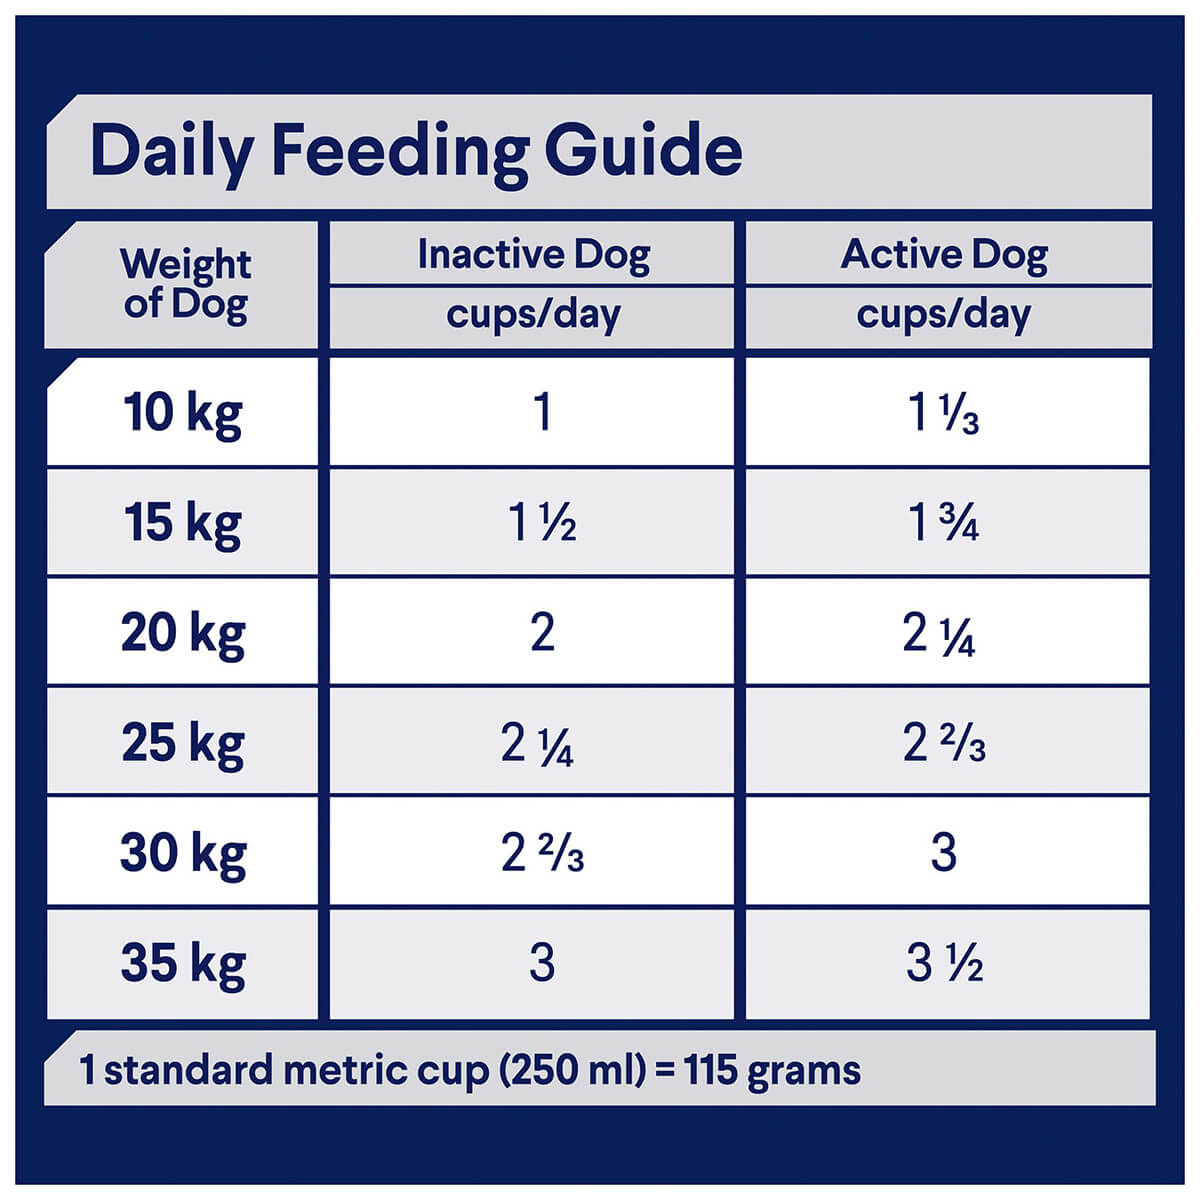 Advance Adult Lamb & Rice Dry Dog Food (122711000019) [default_color]